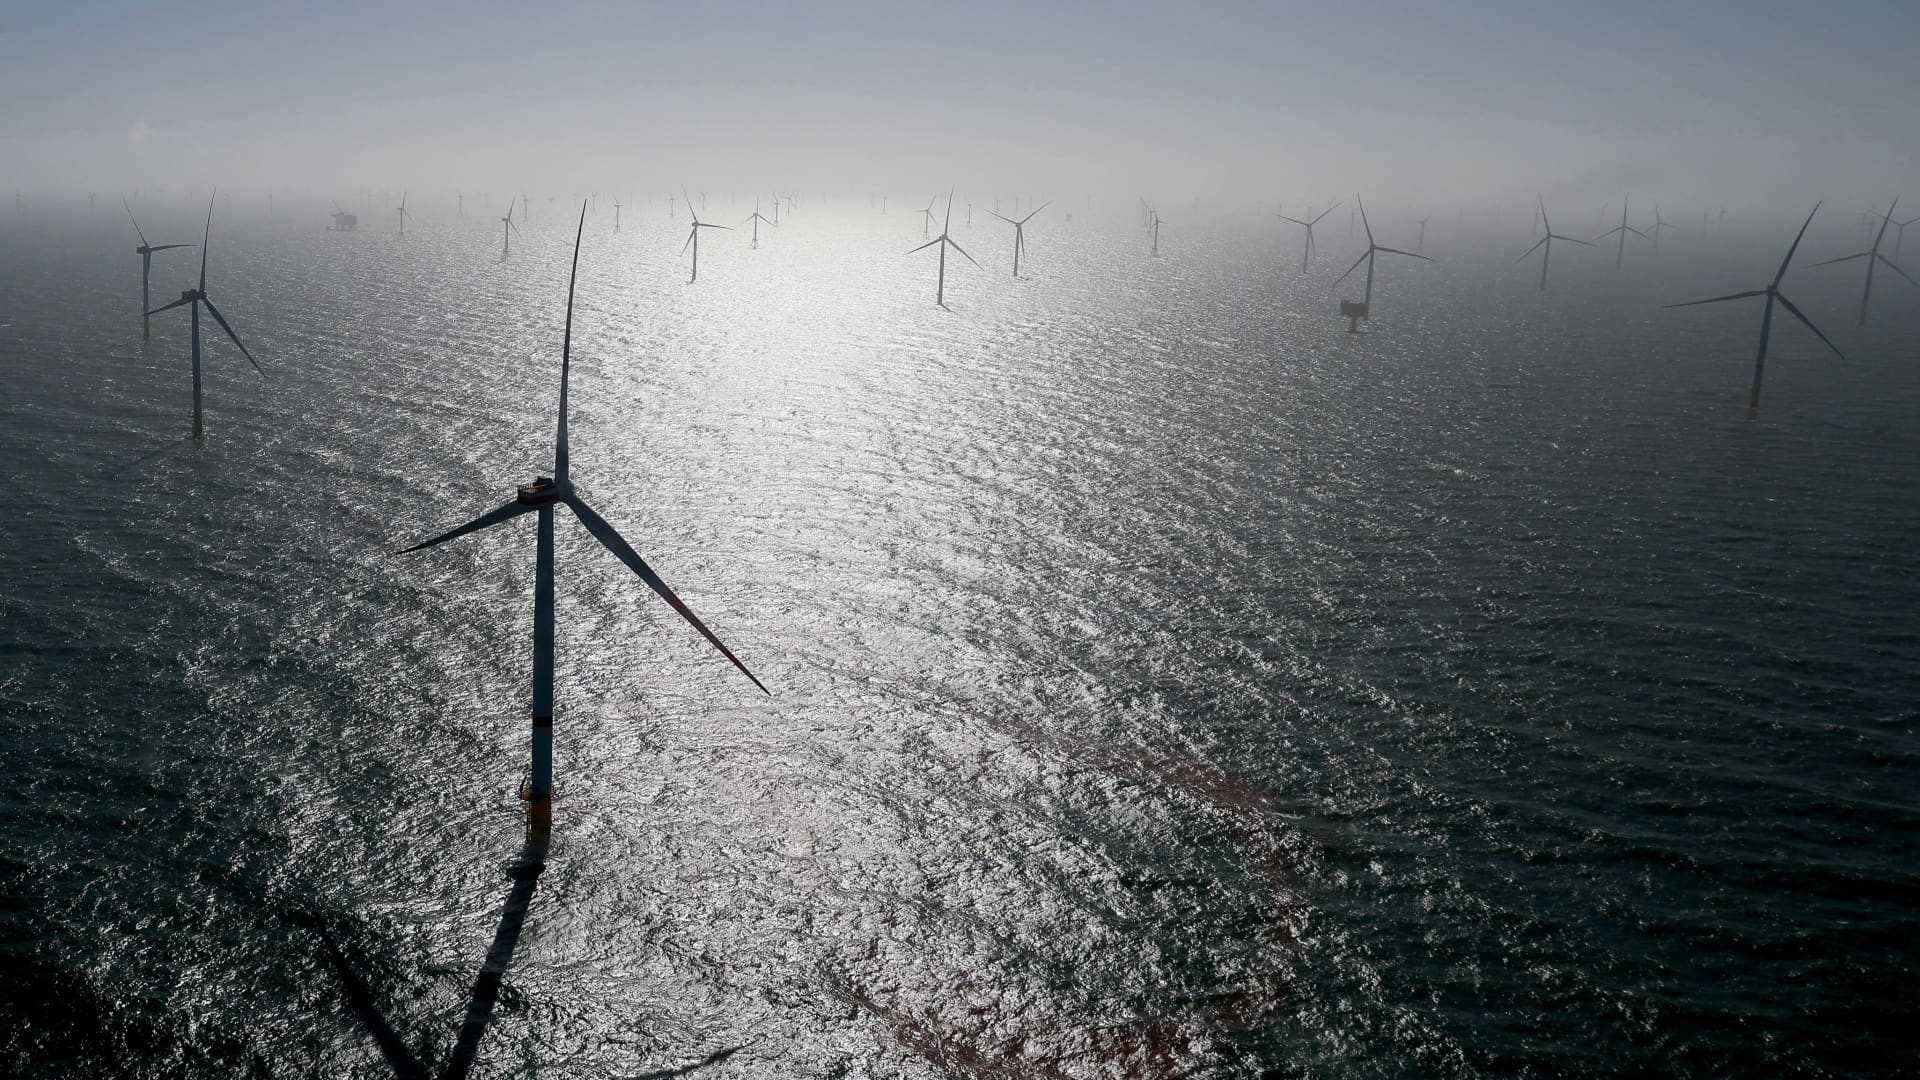 EU agrees to ramp up 2030 renewable energy targets